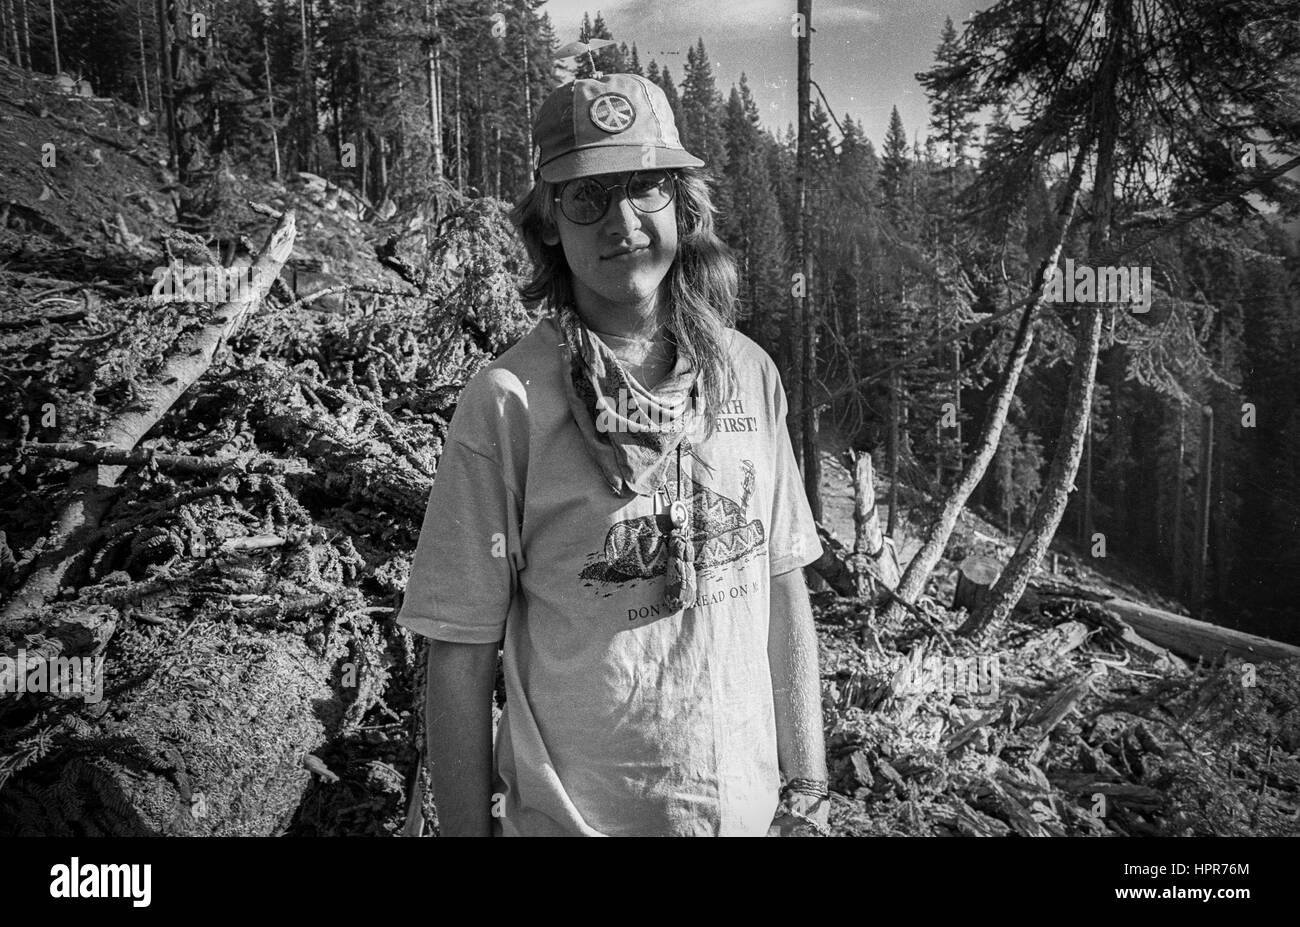 Messa a terra per primo! Redwood Estate. Sequoia National Forest. 1989 (foto di Jeremy Hogan) Foto Stock